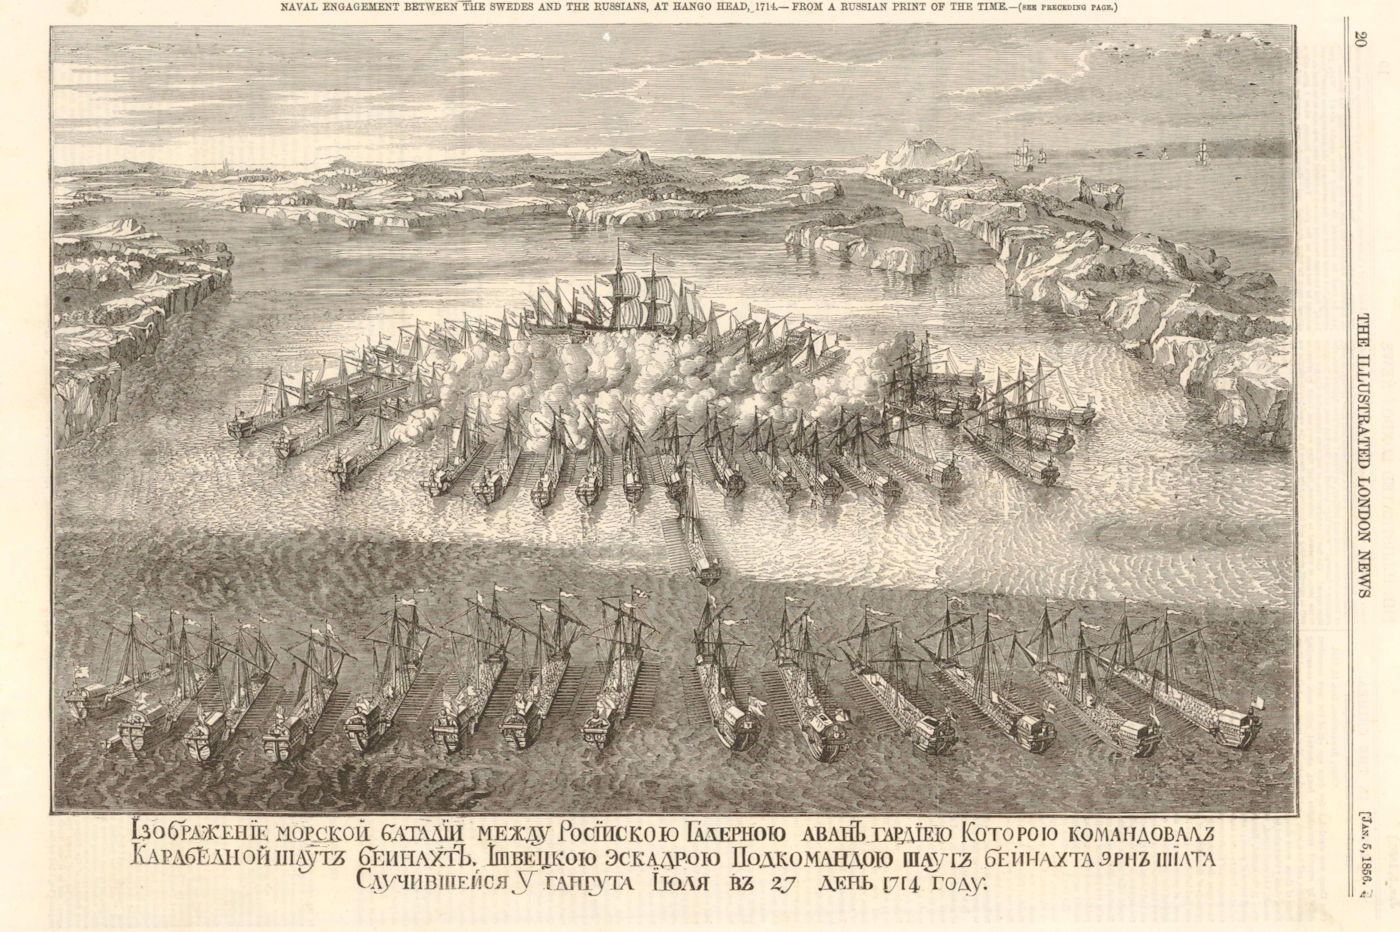 Battle of Gangut. Sweden & Russia Hanko (Hango) Head 1714. Finland 1856